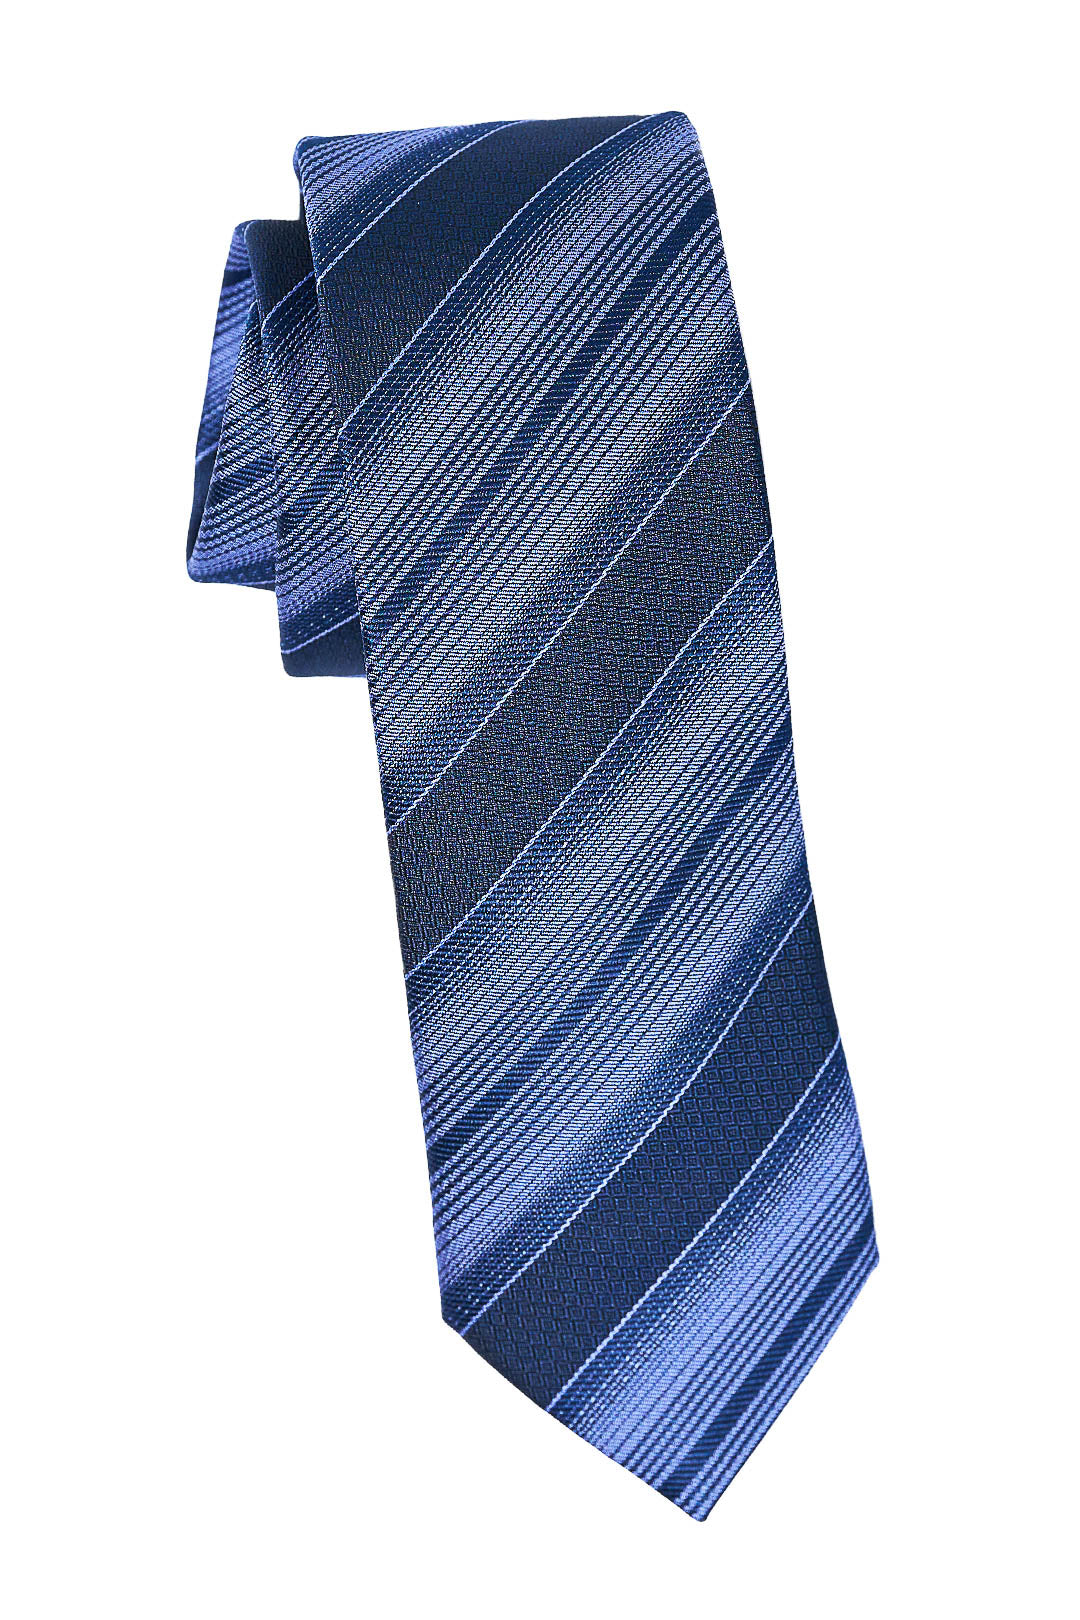 Silk Rep Navy Tie